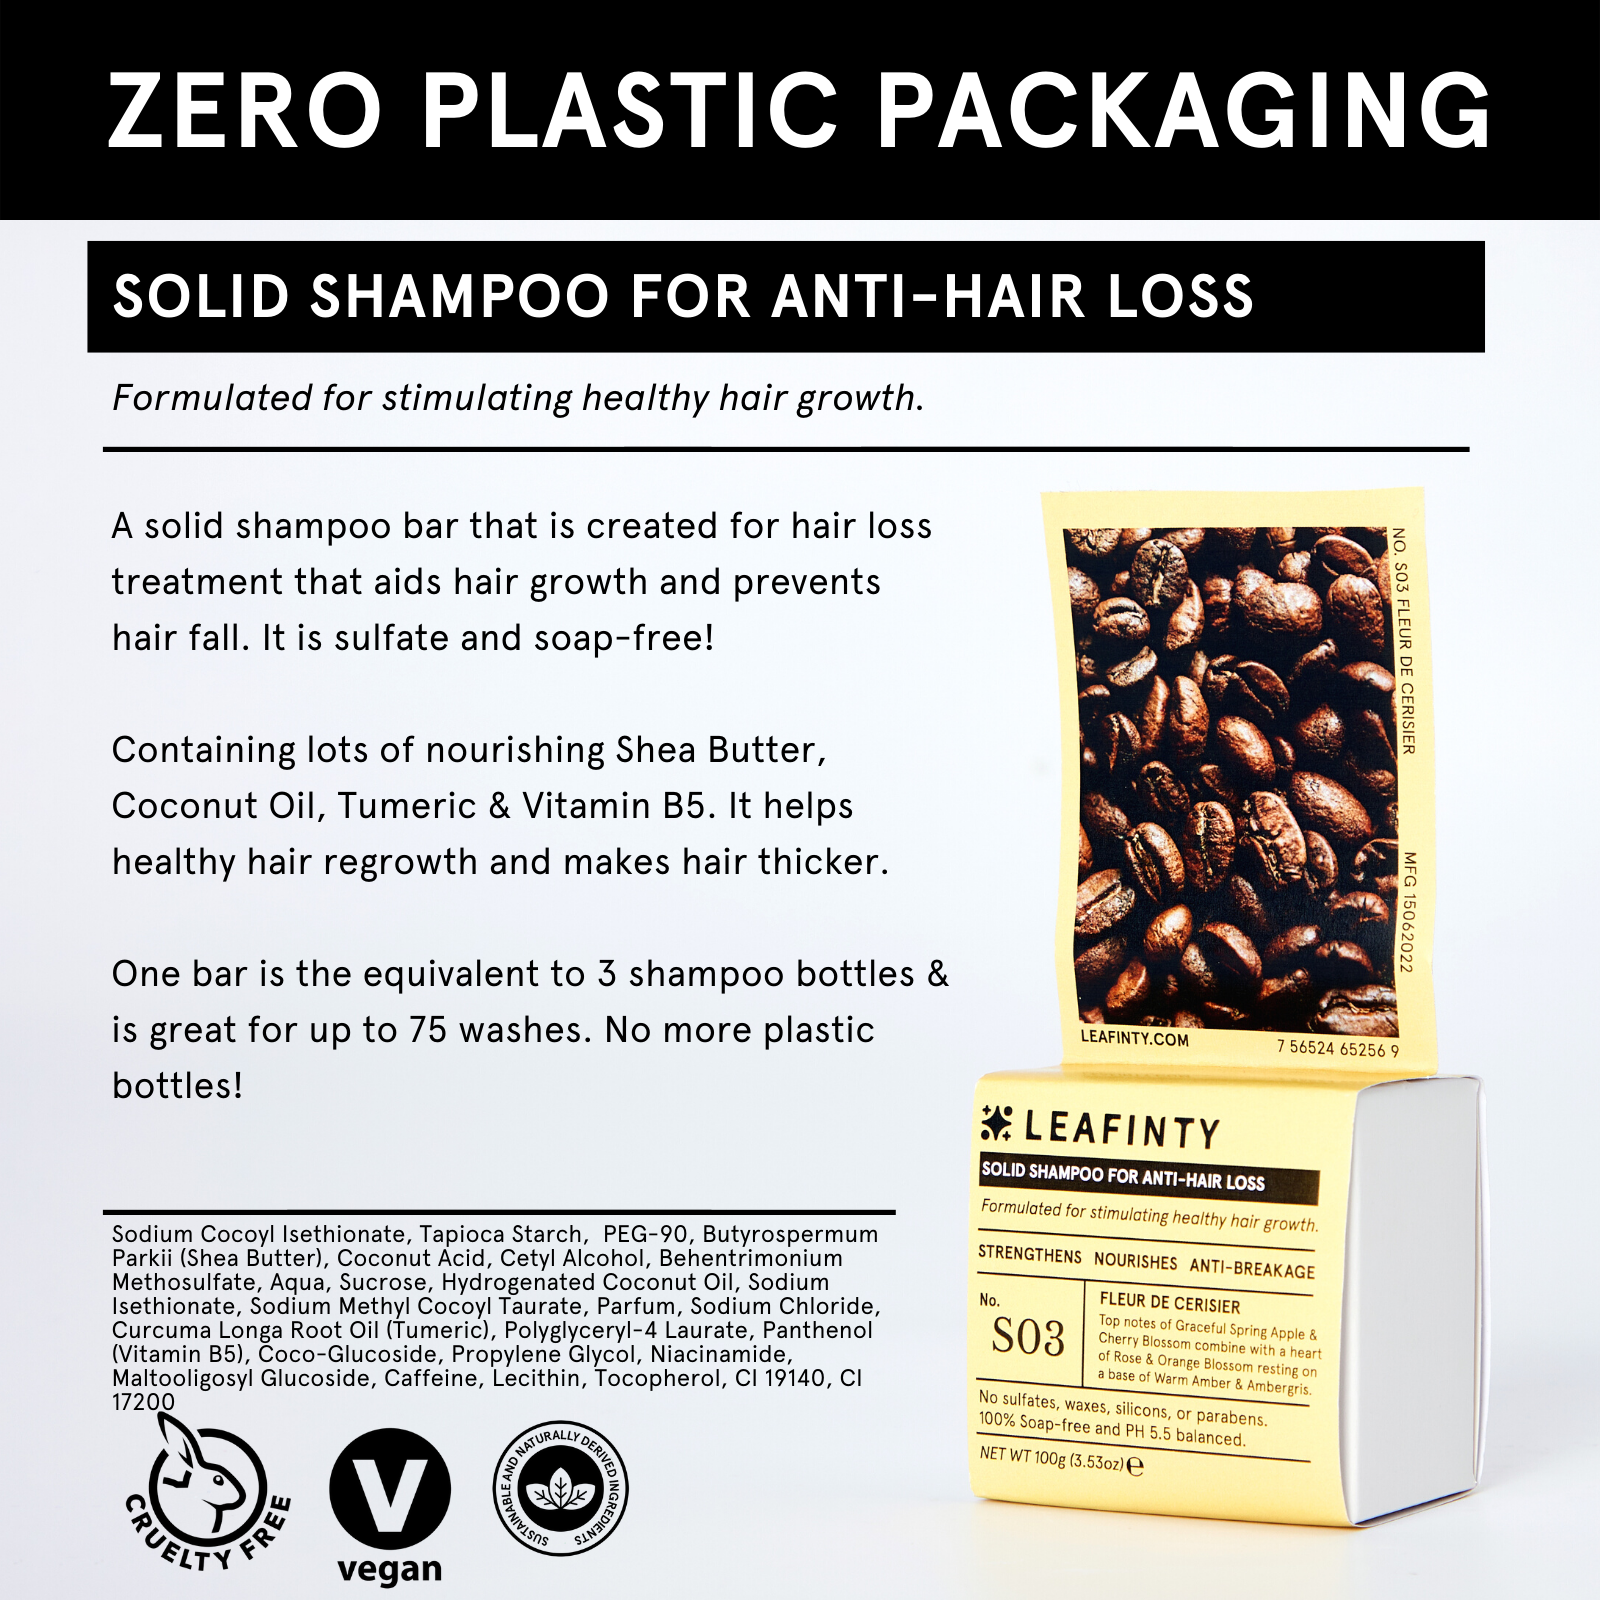 S03 Solid Shampoo Bar for Stimulating Hair Growth & Healthier Hair